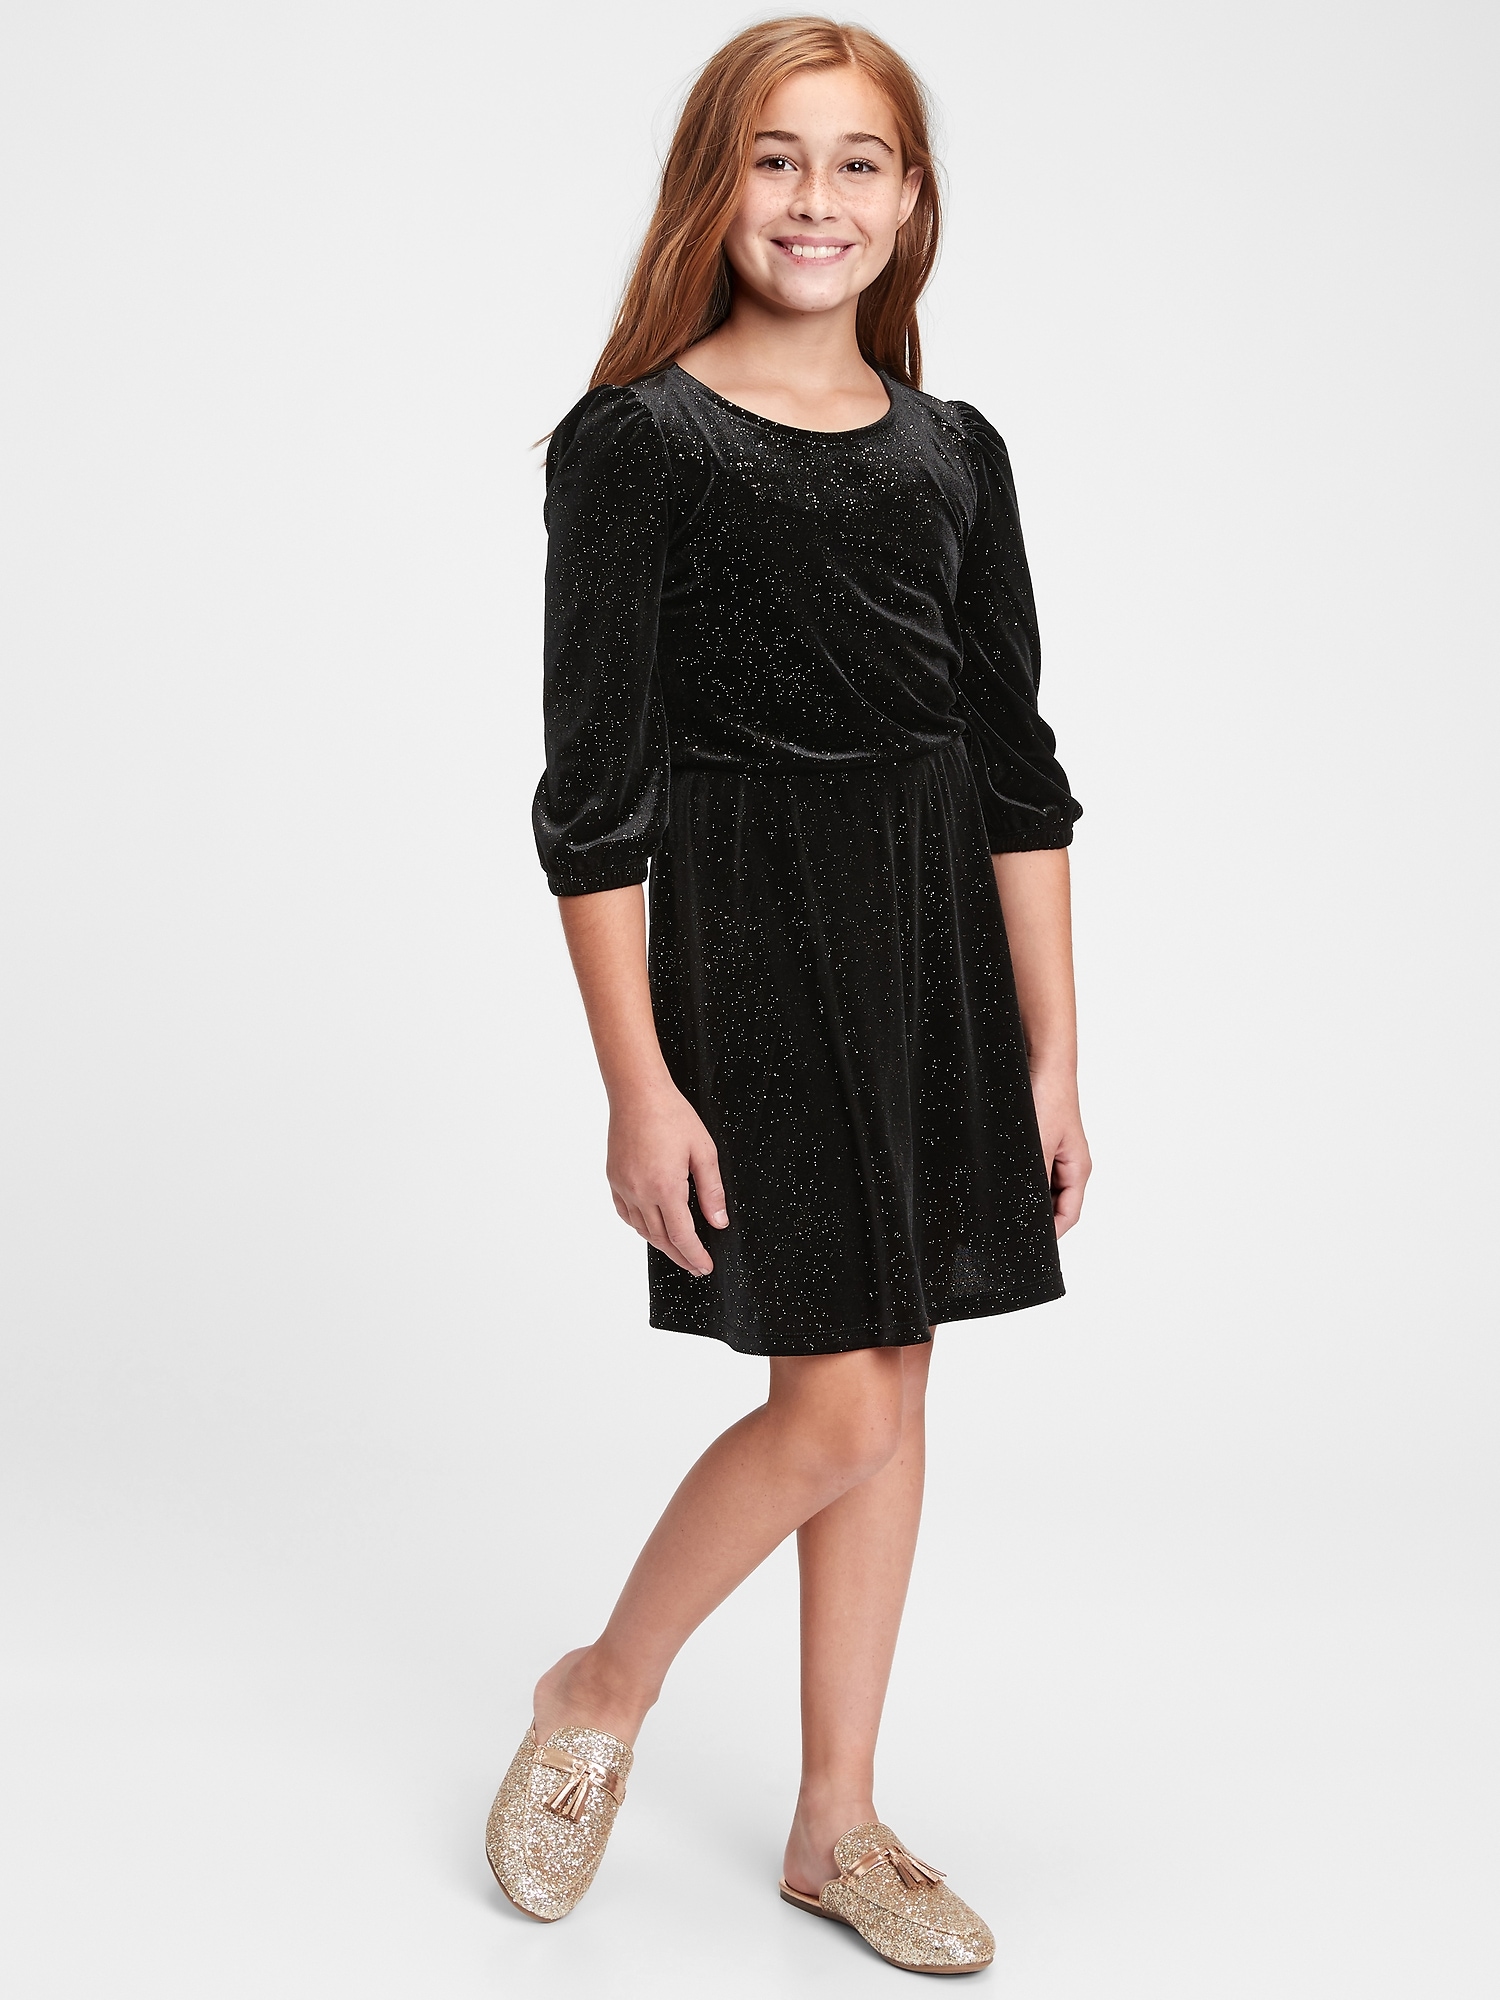 SALE SALE Clearance SALE Velvet Black Dress. Kids Girls Size 8 -  Canada